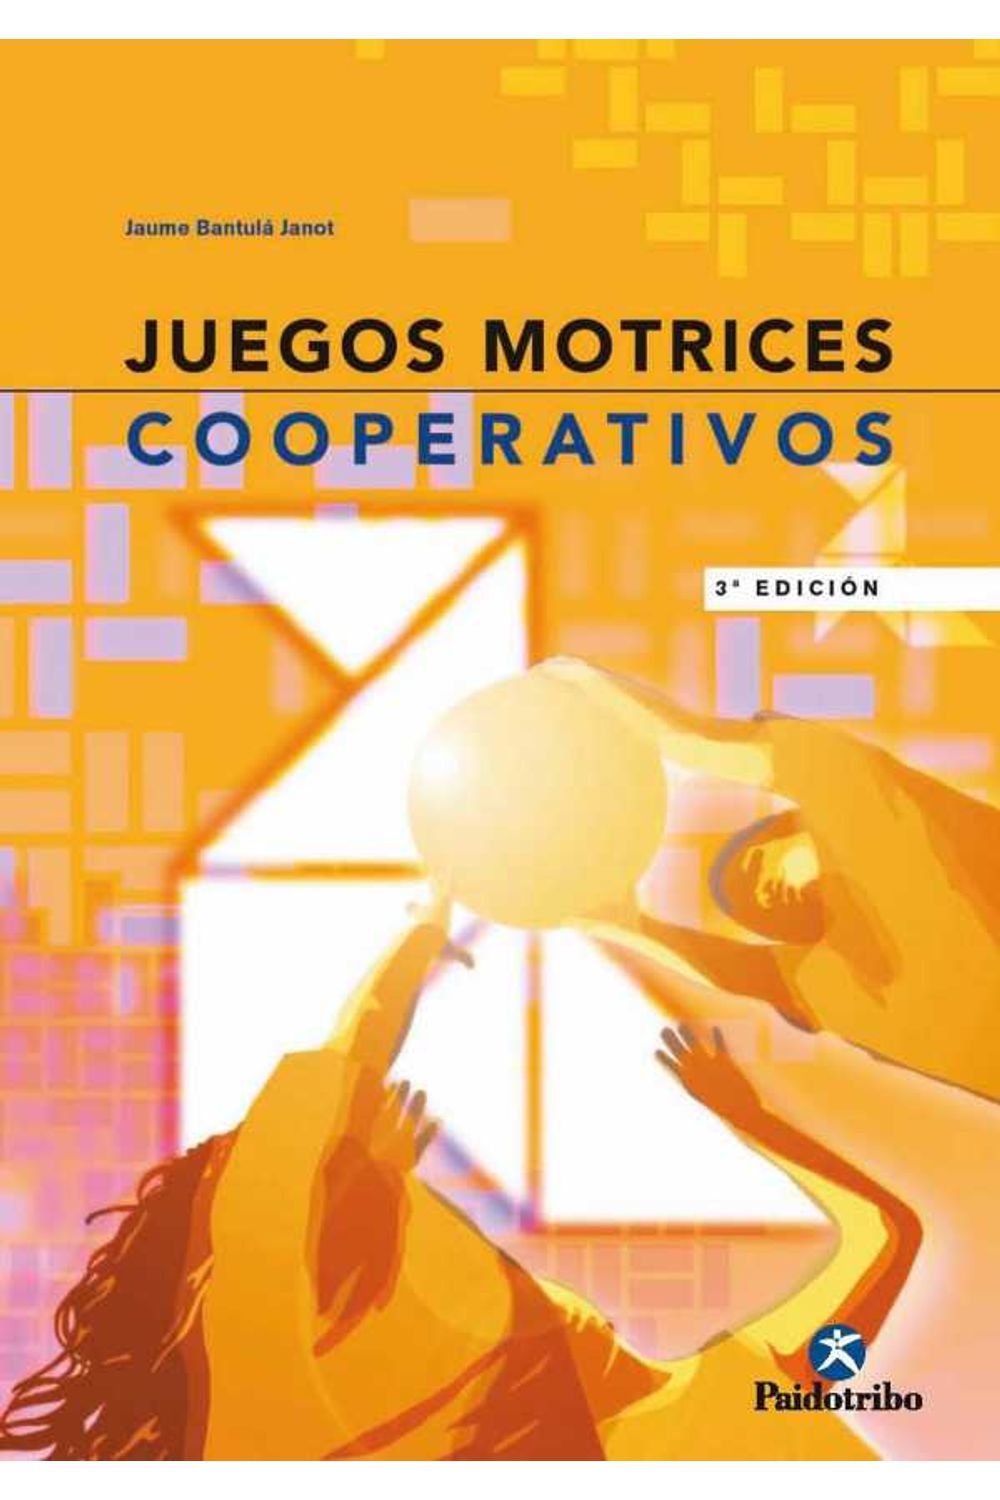 bw-juegos-motrices-cooperativos-paidotribo-9788499107882